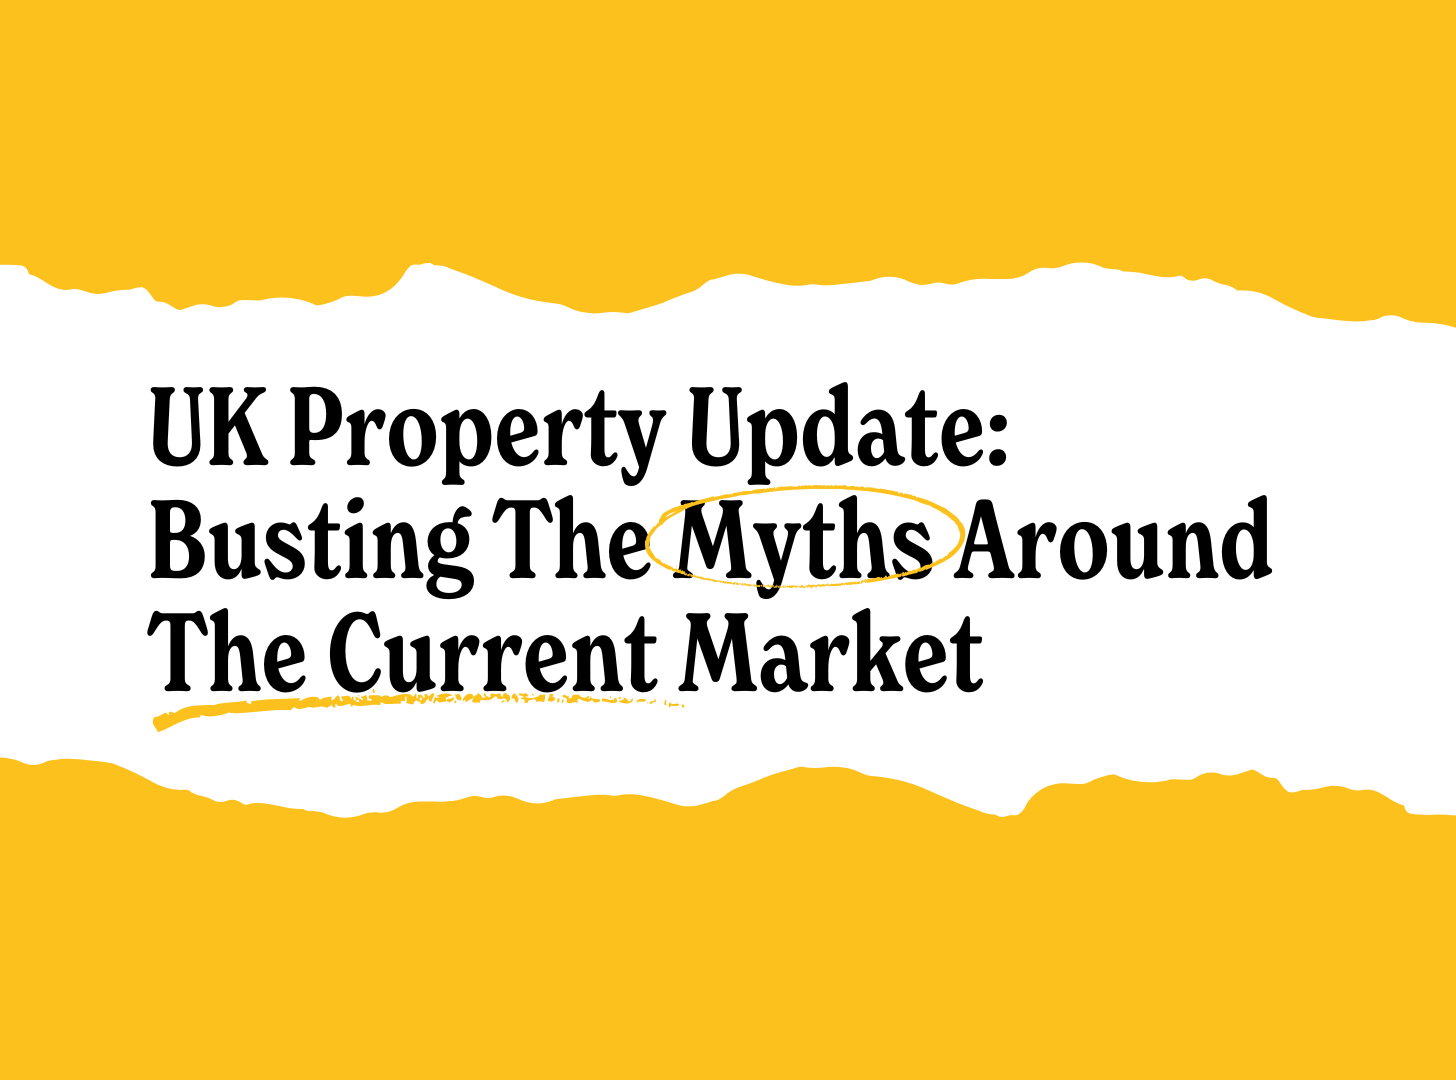 UK Property Update Blog